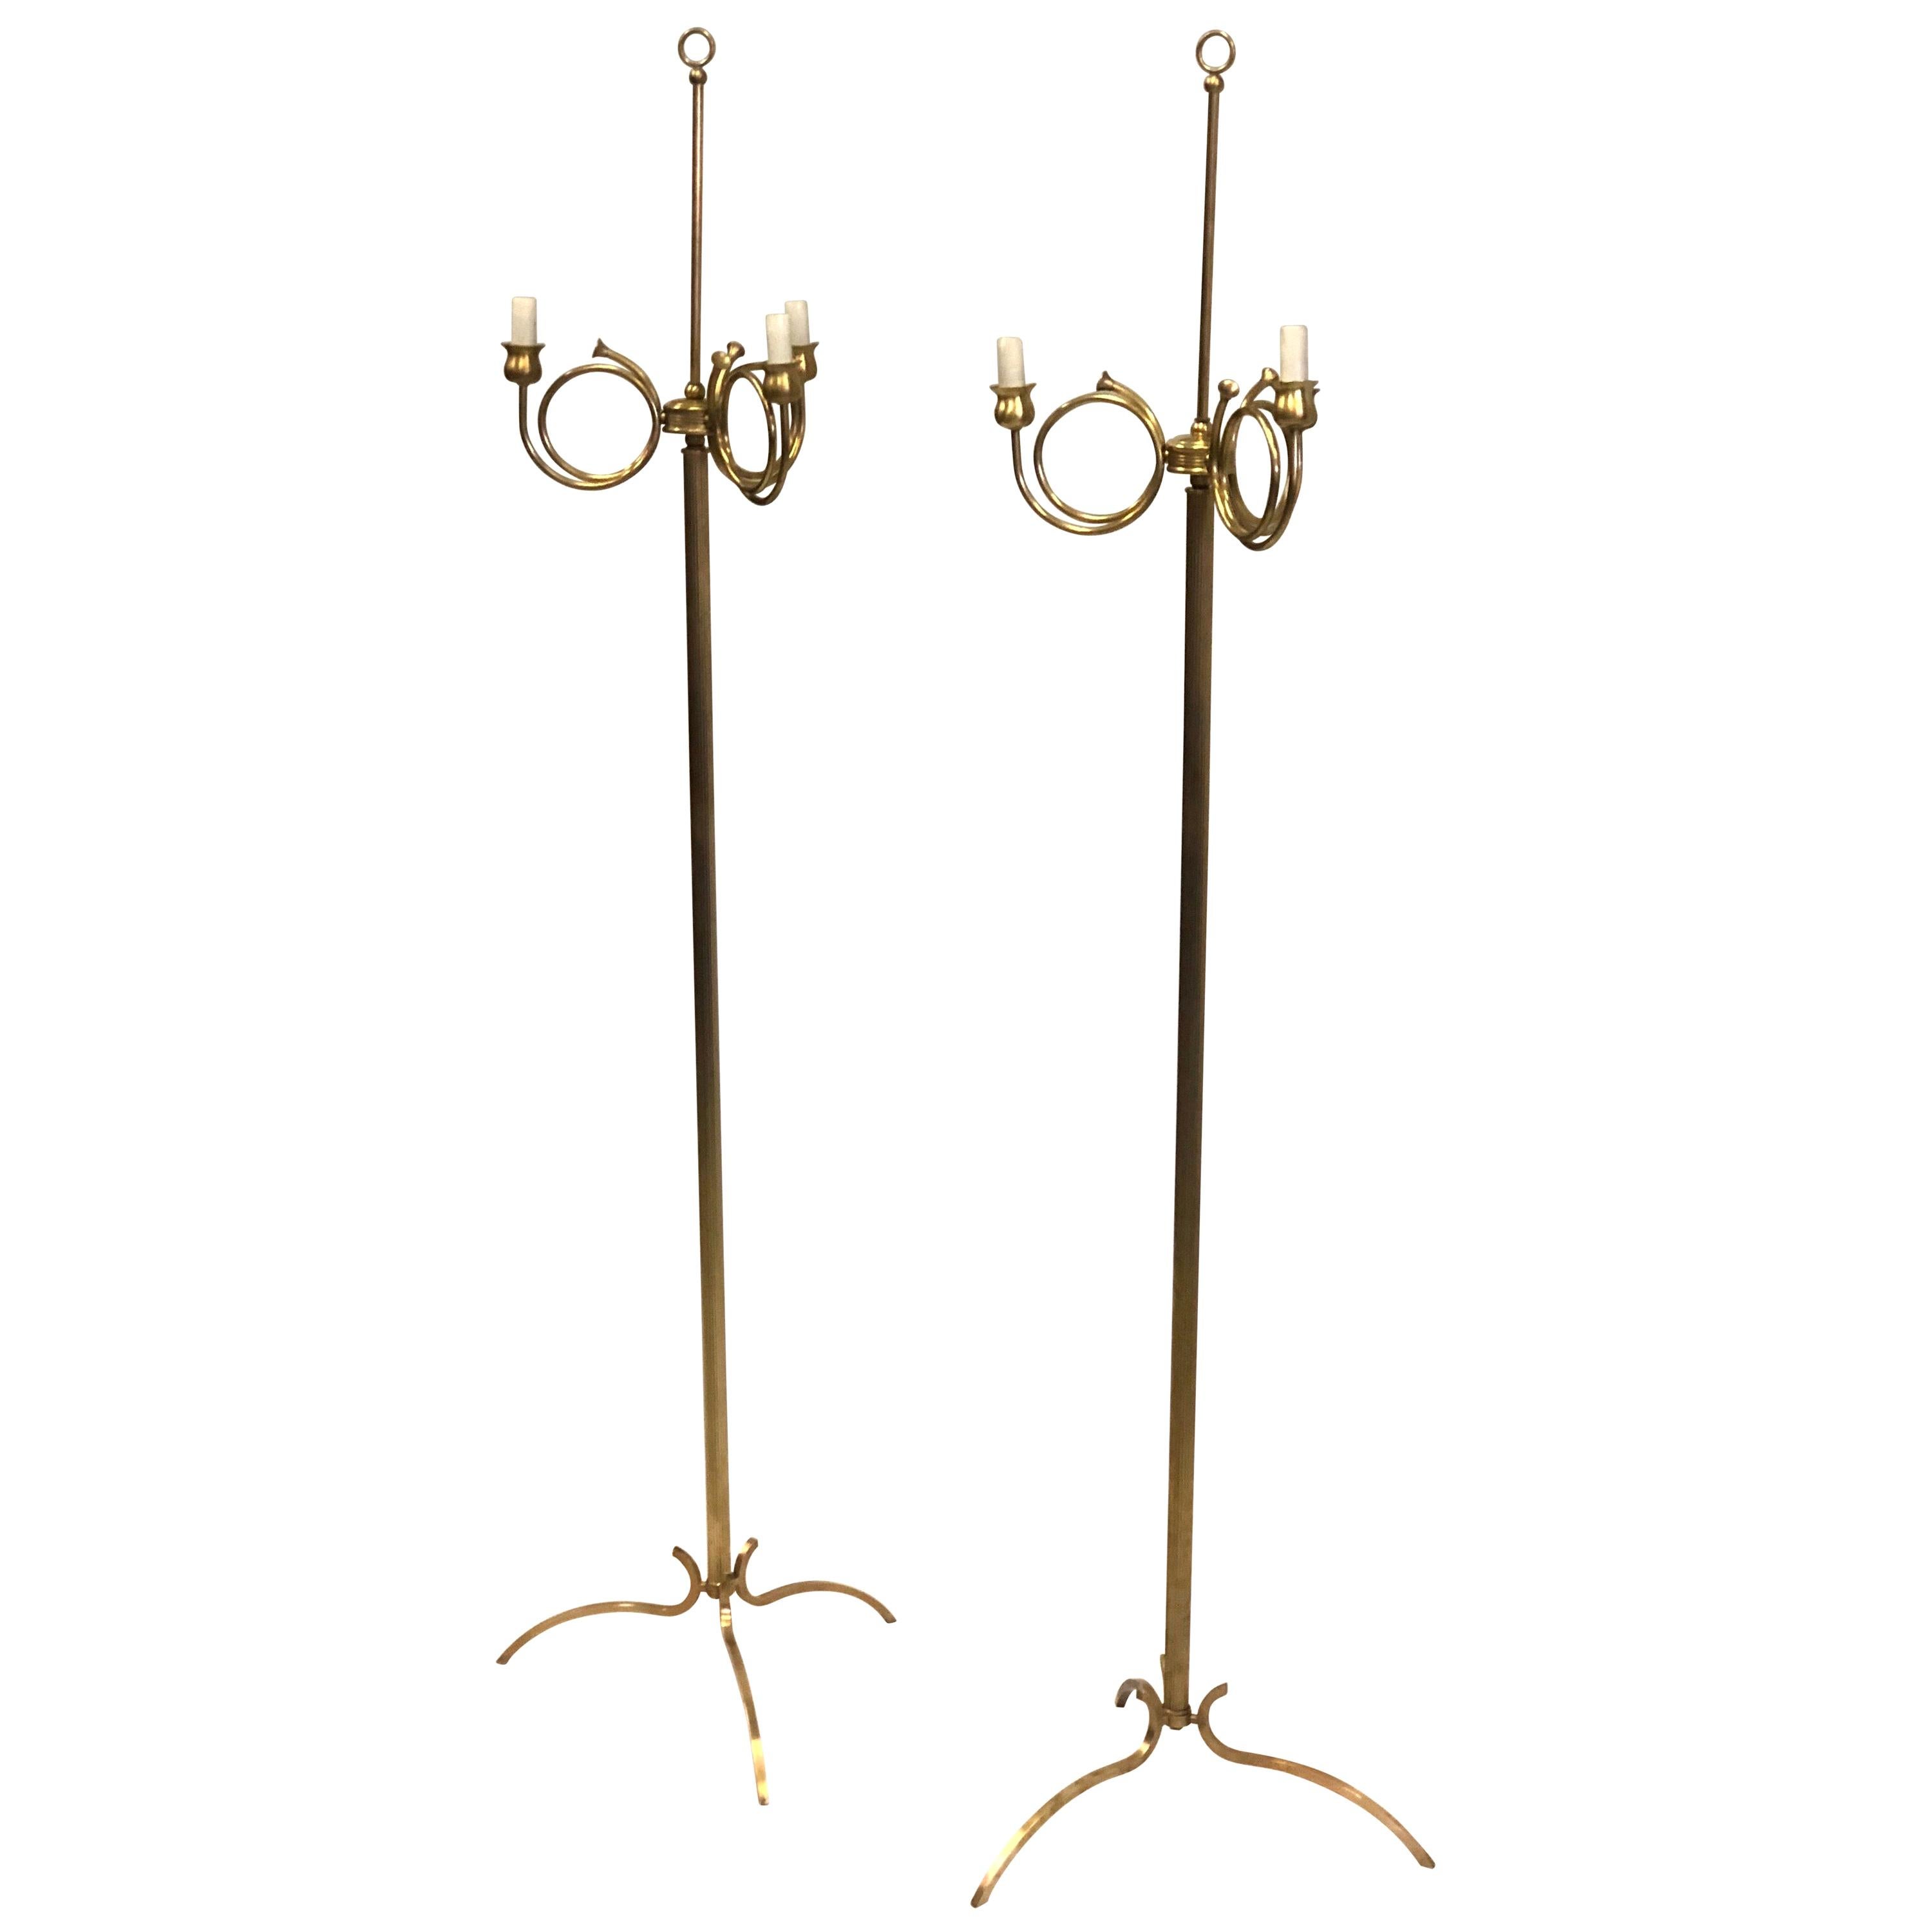 Pair of Mid-Century Modern Neoclassical Brass Floor Lamps by Maison Jansen